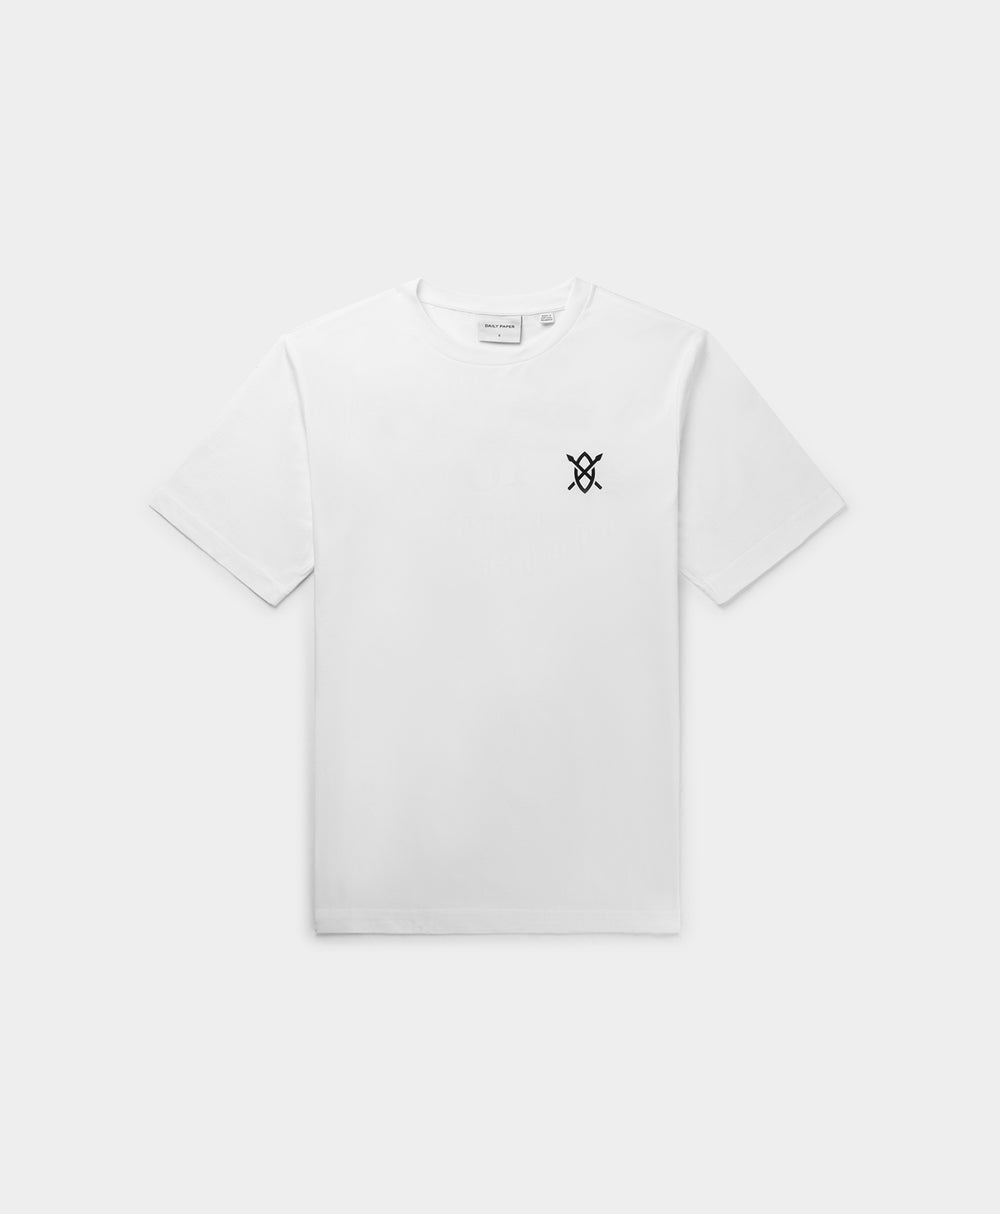 DP - White Black London Flagship Store T-Shirt - Packshot - Rear